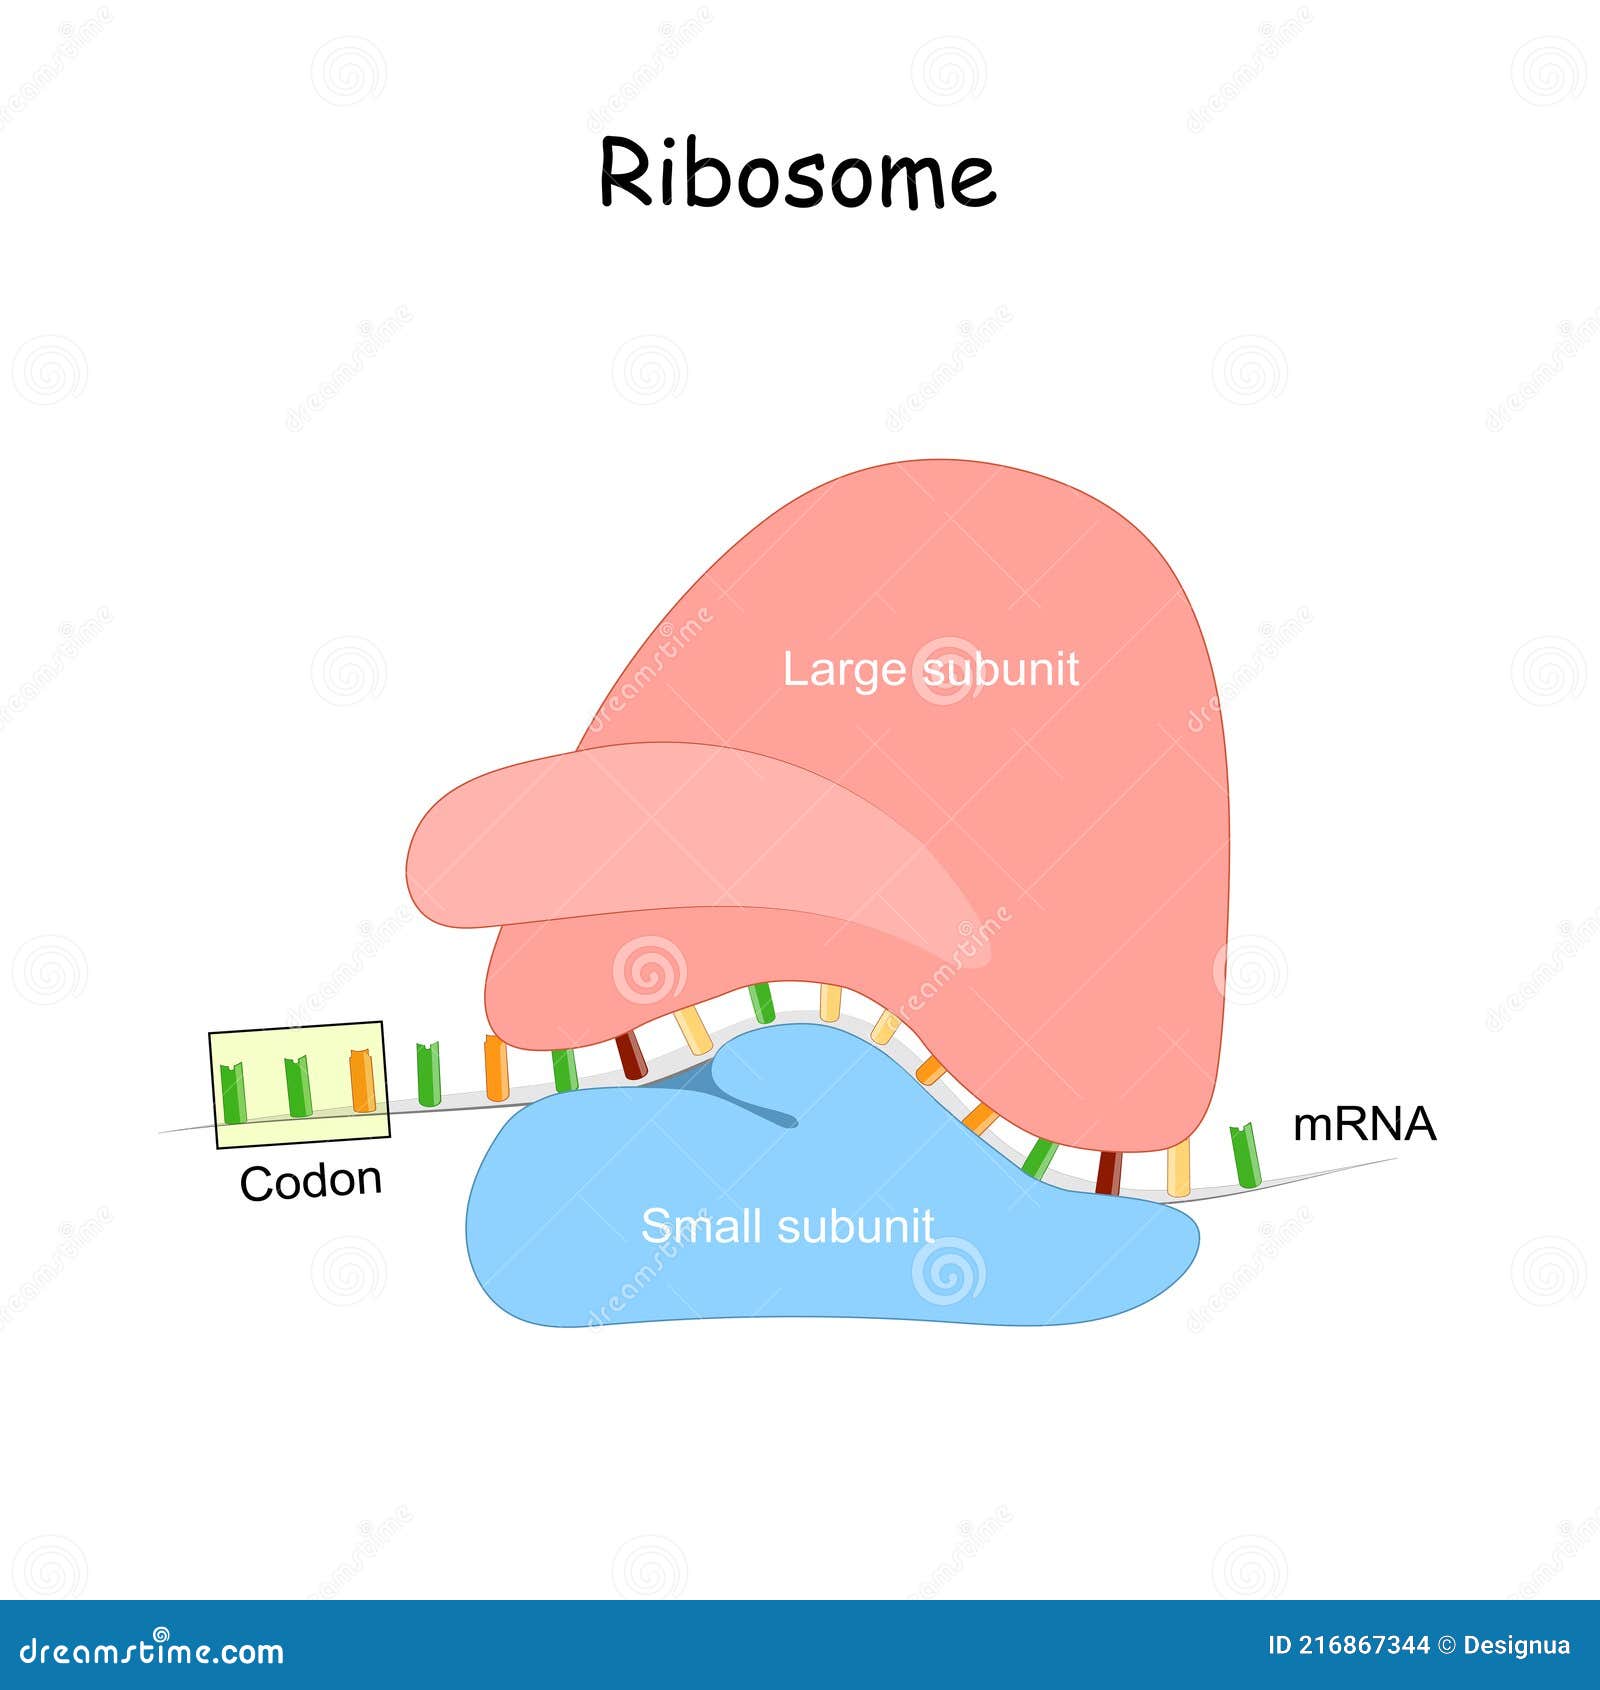 ribosome and mrna